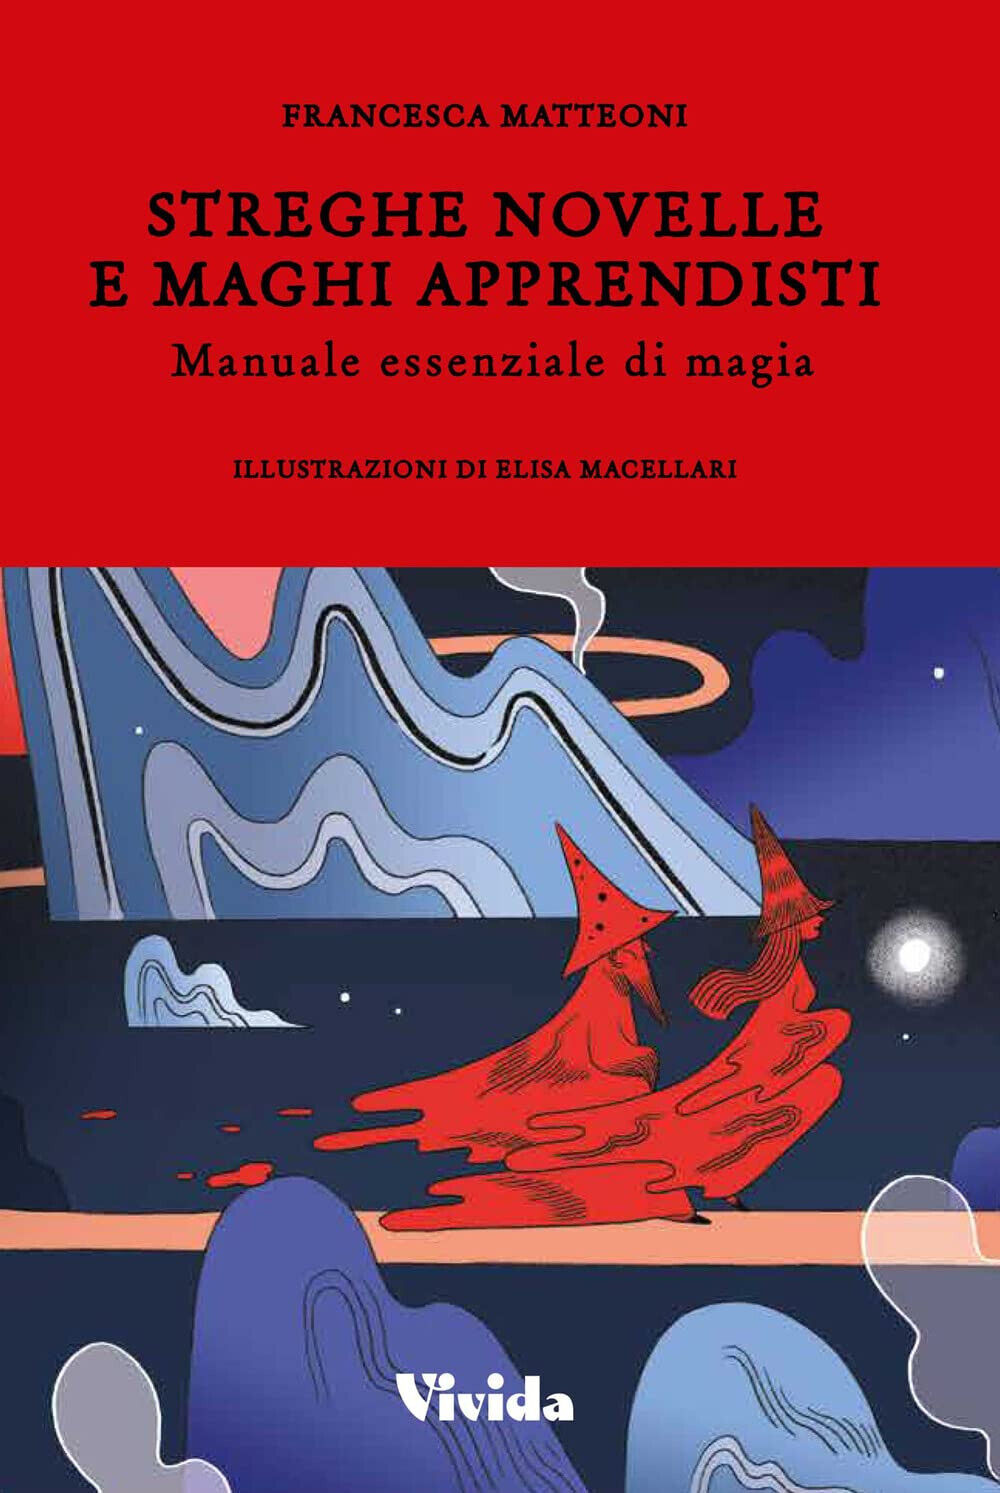 Streghe novelle e maghi apprendisti - Francesca Matteoni - Vivida, 2021 libro usato